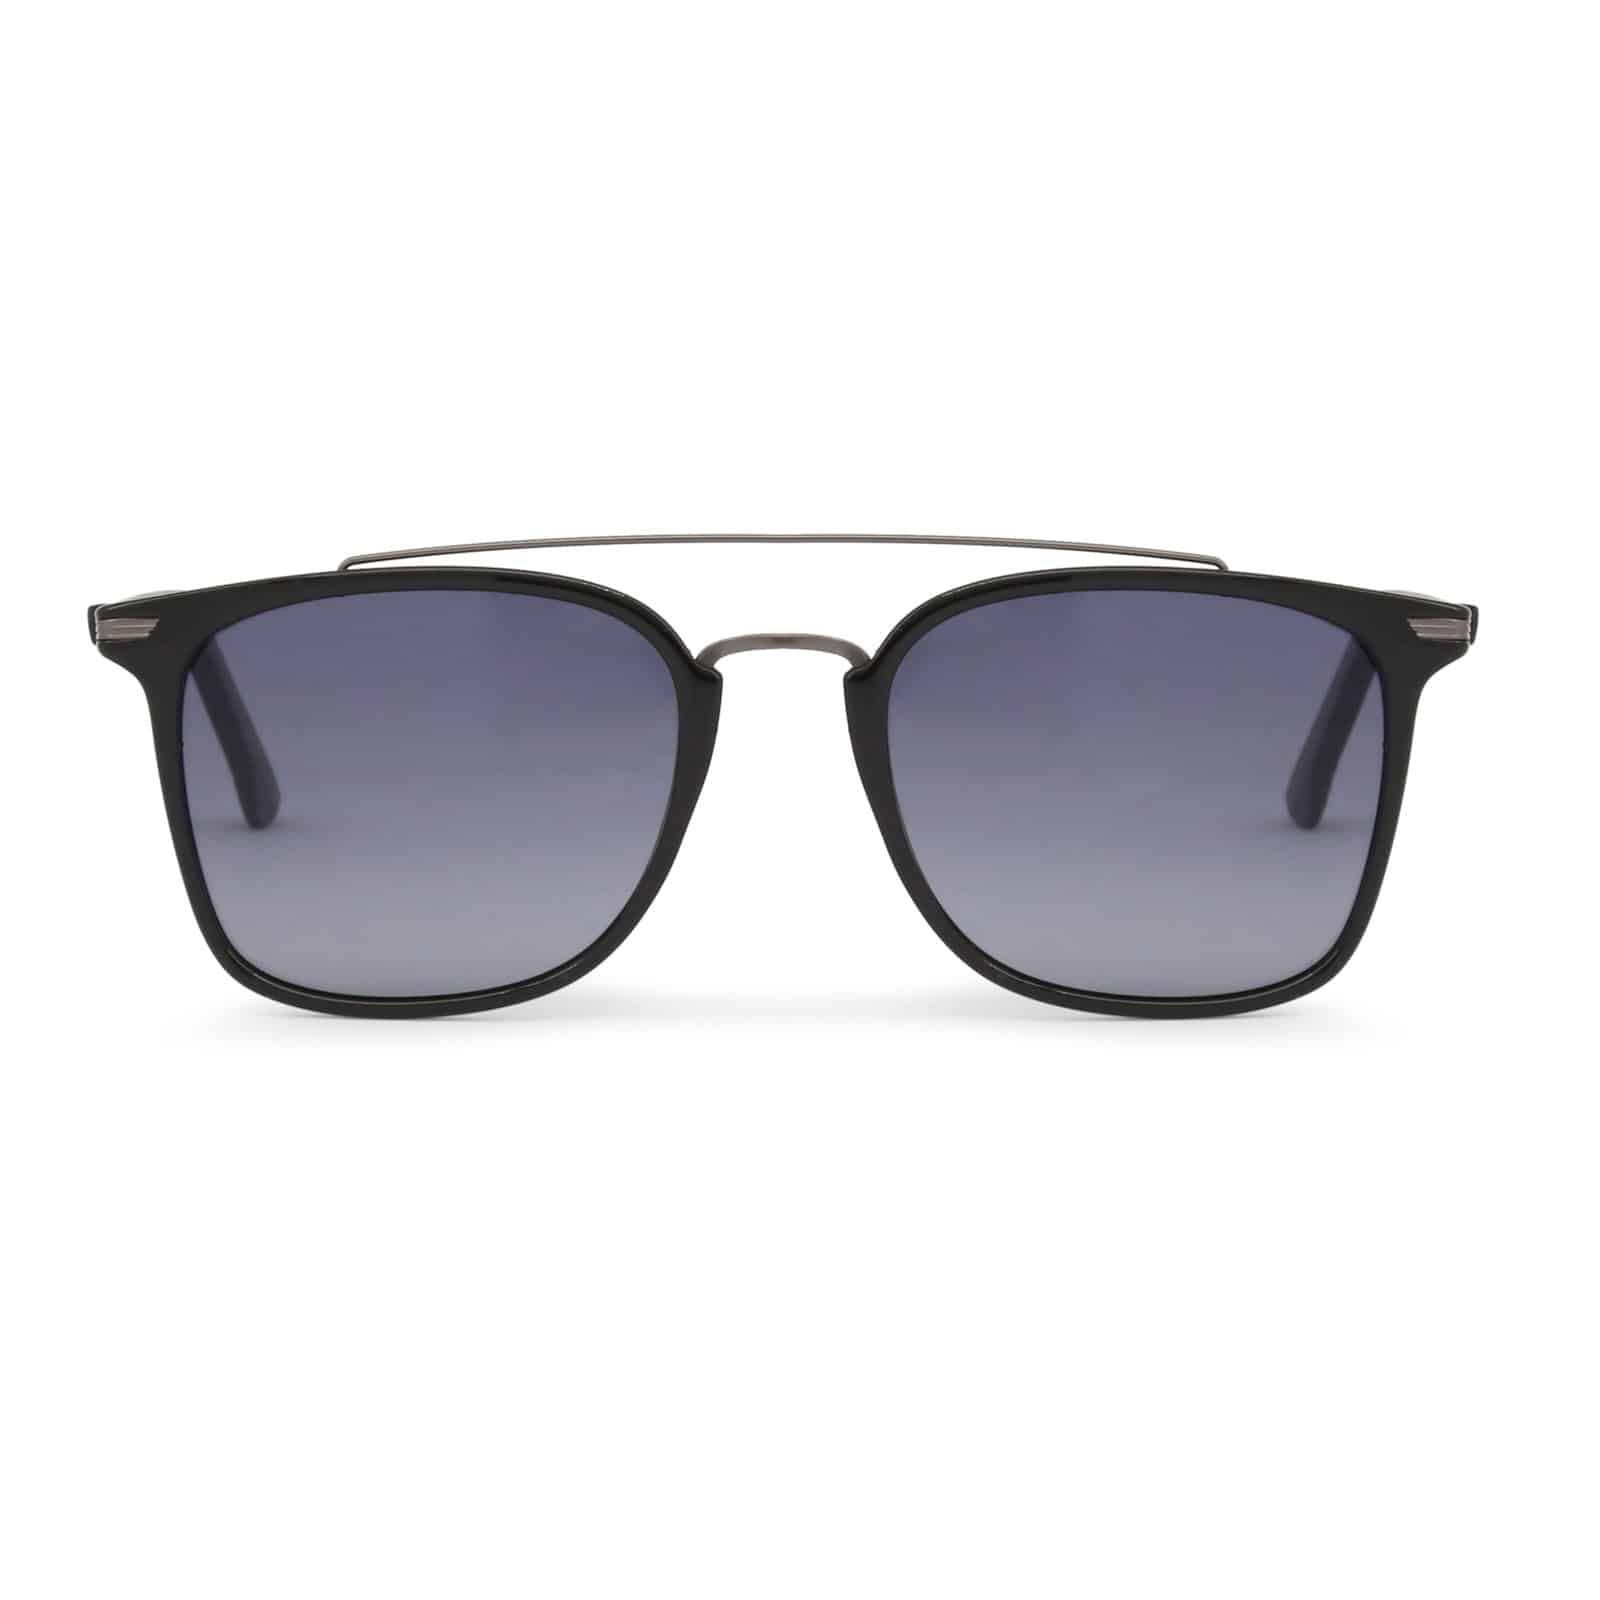 Sparco Podium Black Sunglasses with Black Tint Lenses » Sparco Fashion ...